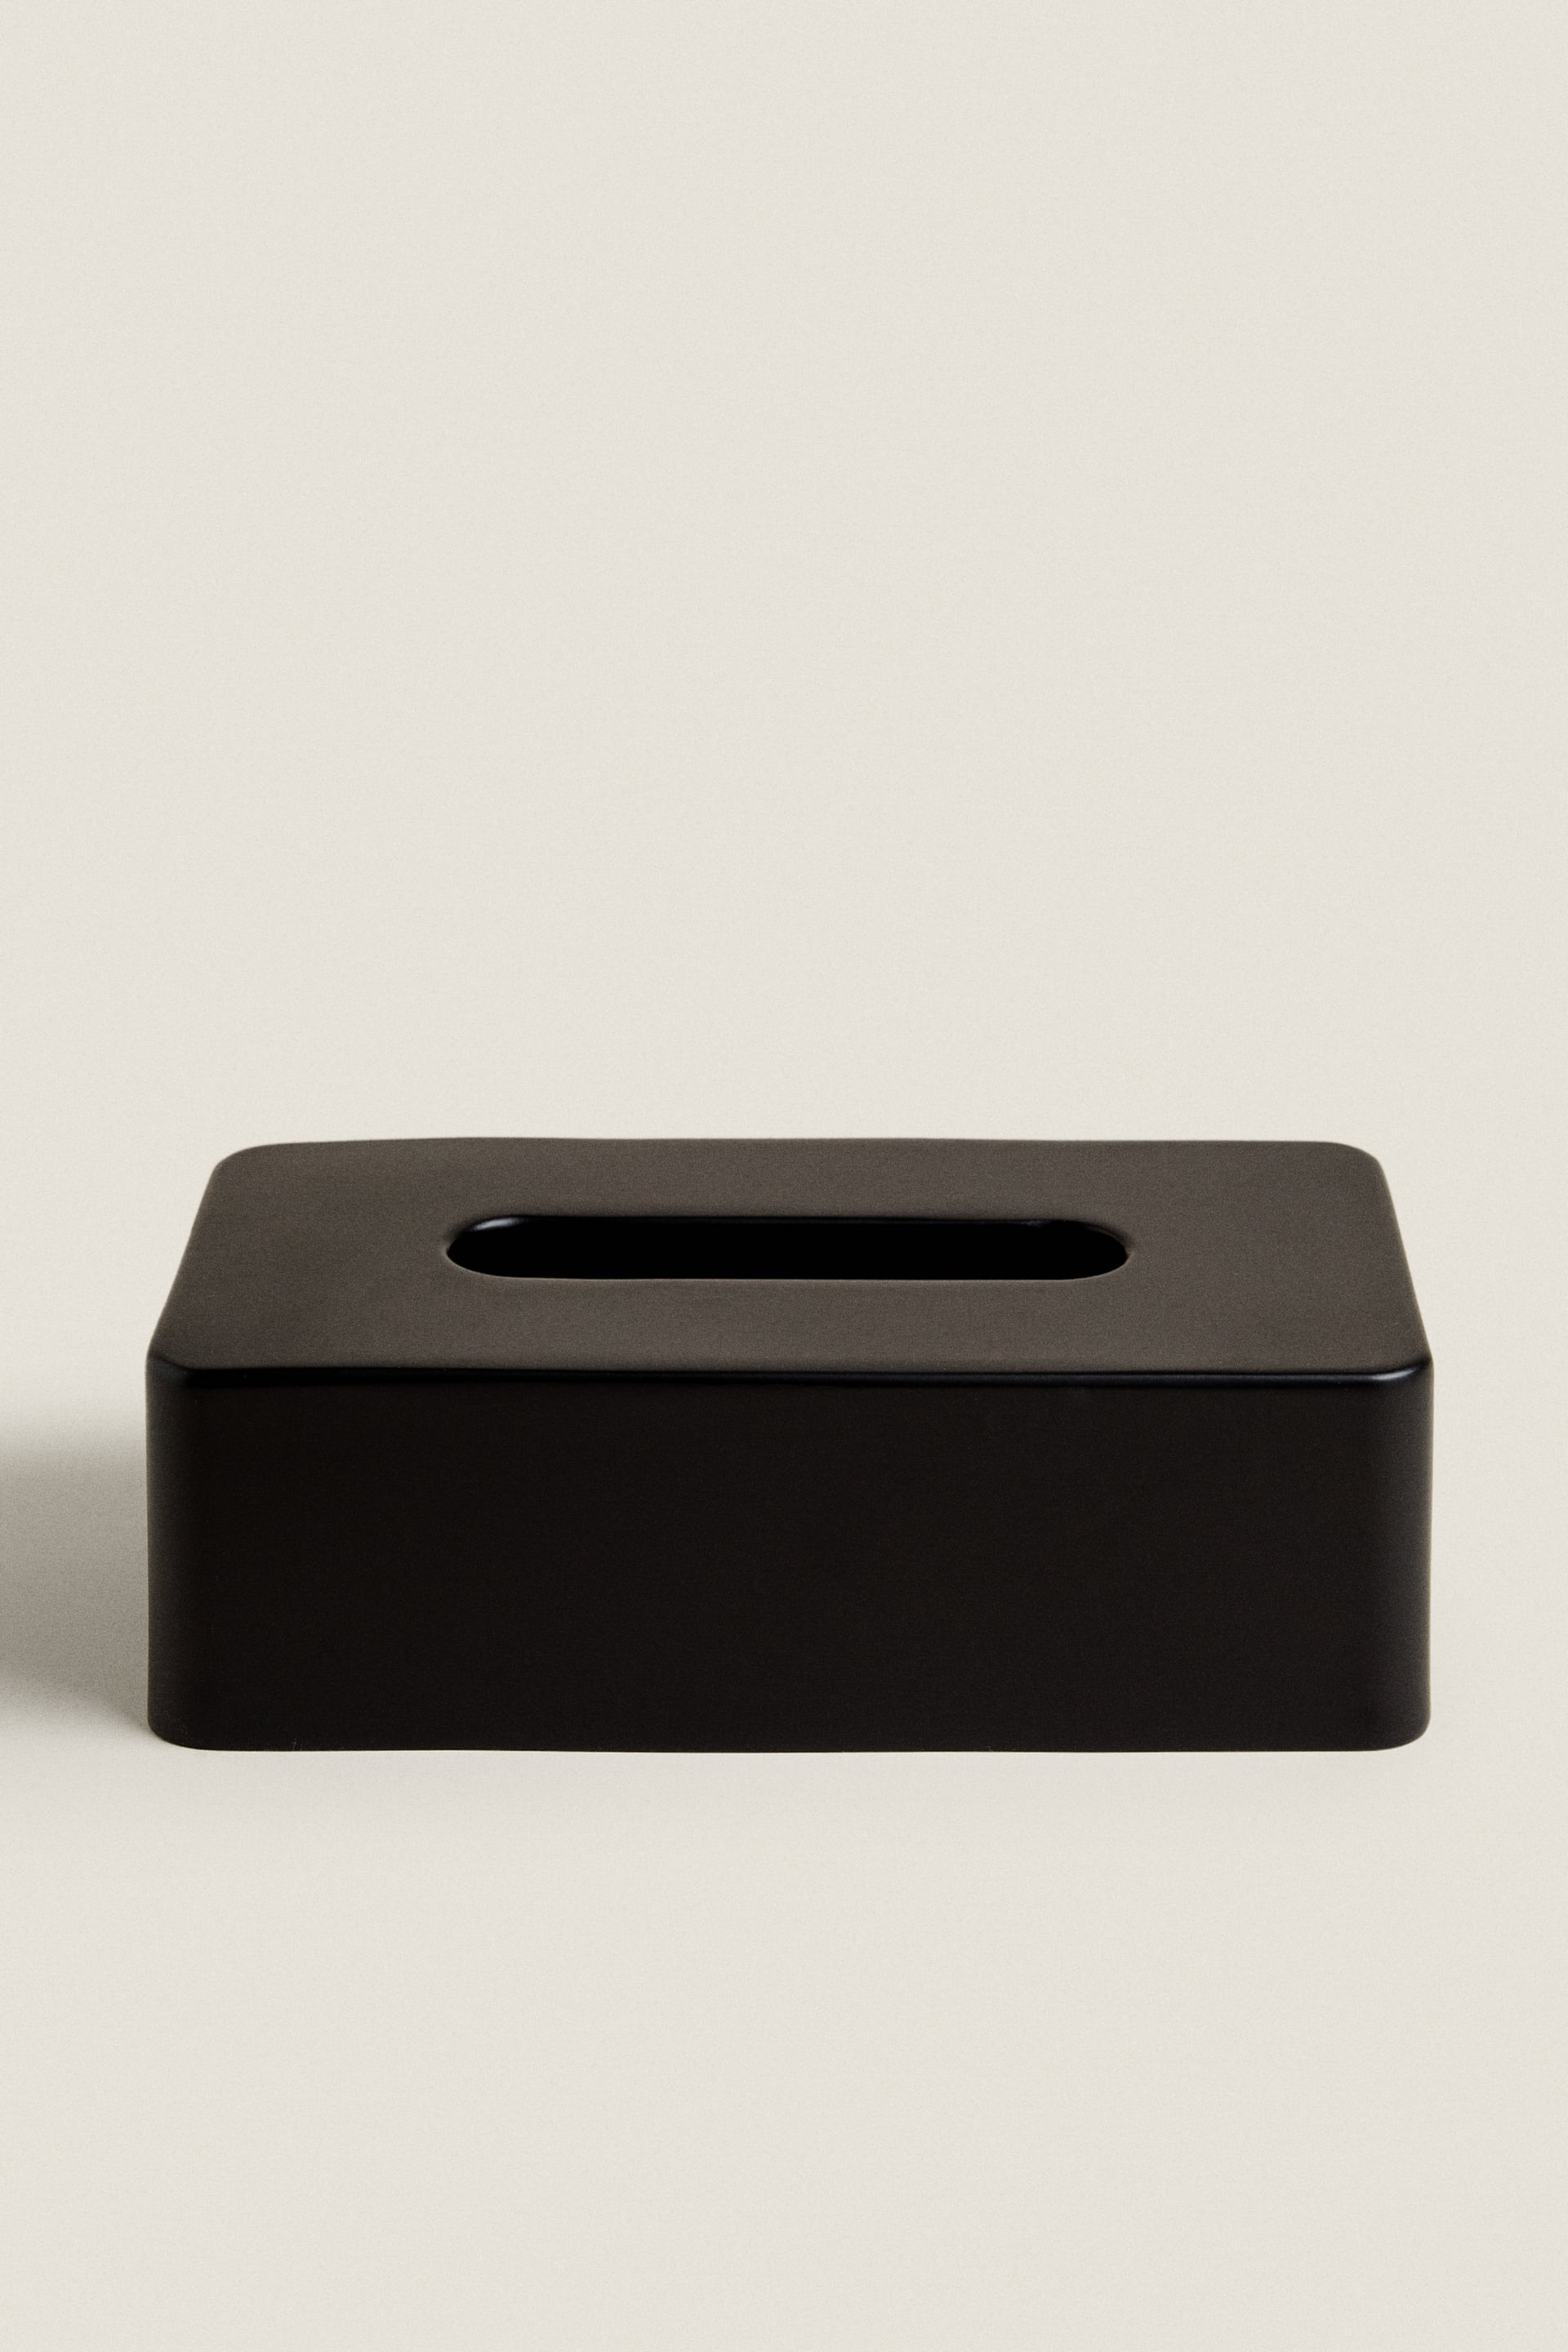 RESIN TISSUE BOX - Black